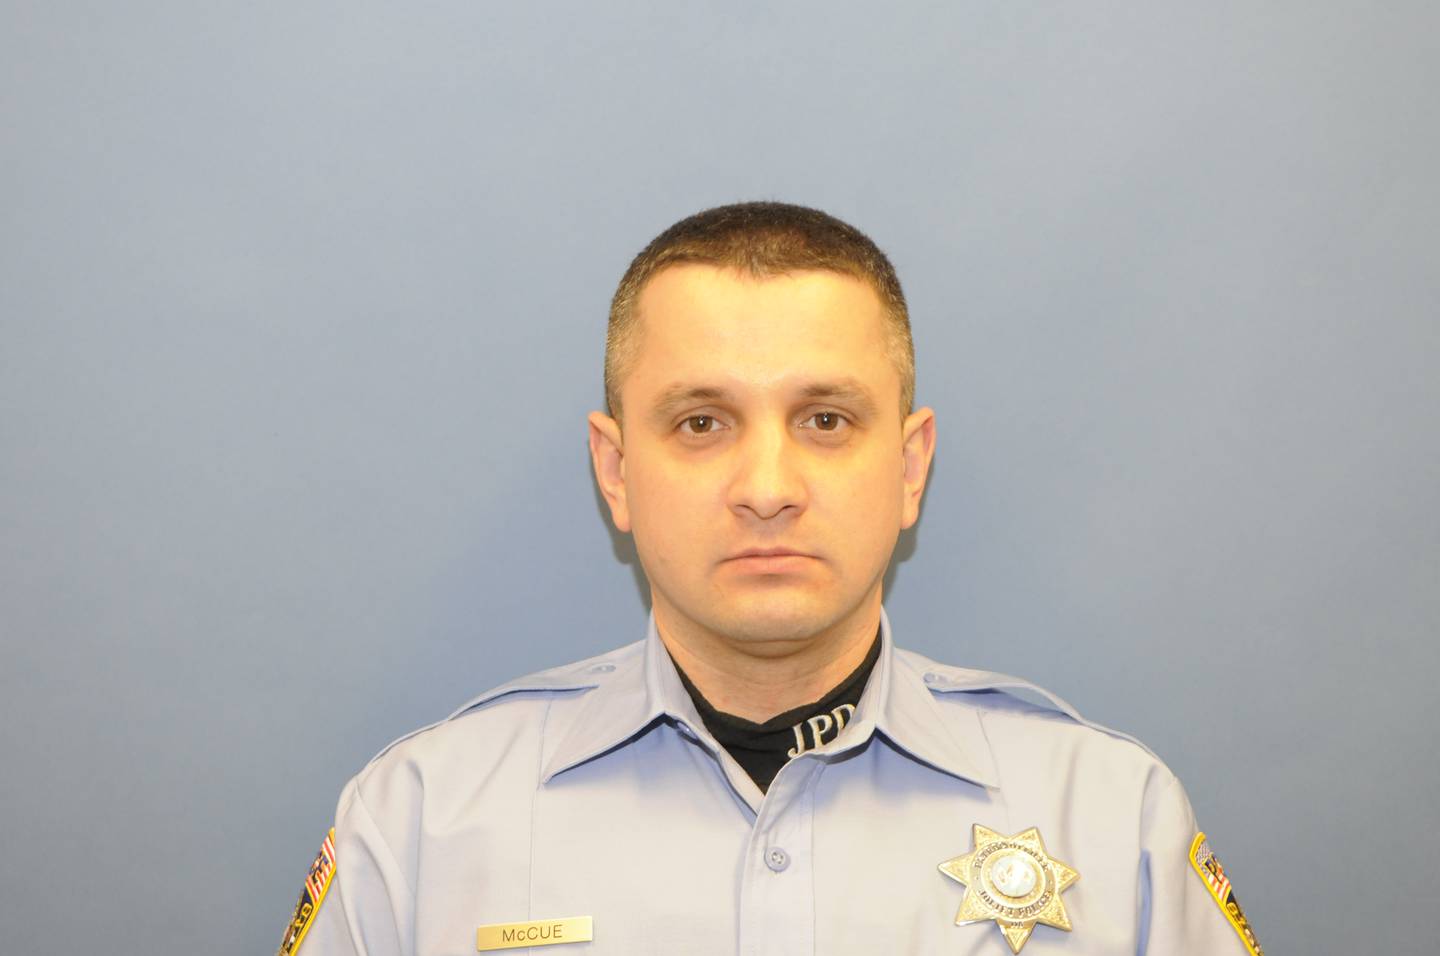 Joliet Police Officer Andrew McCue